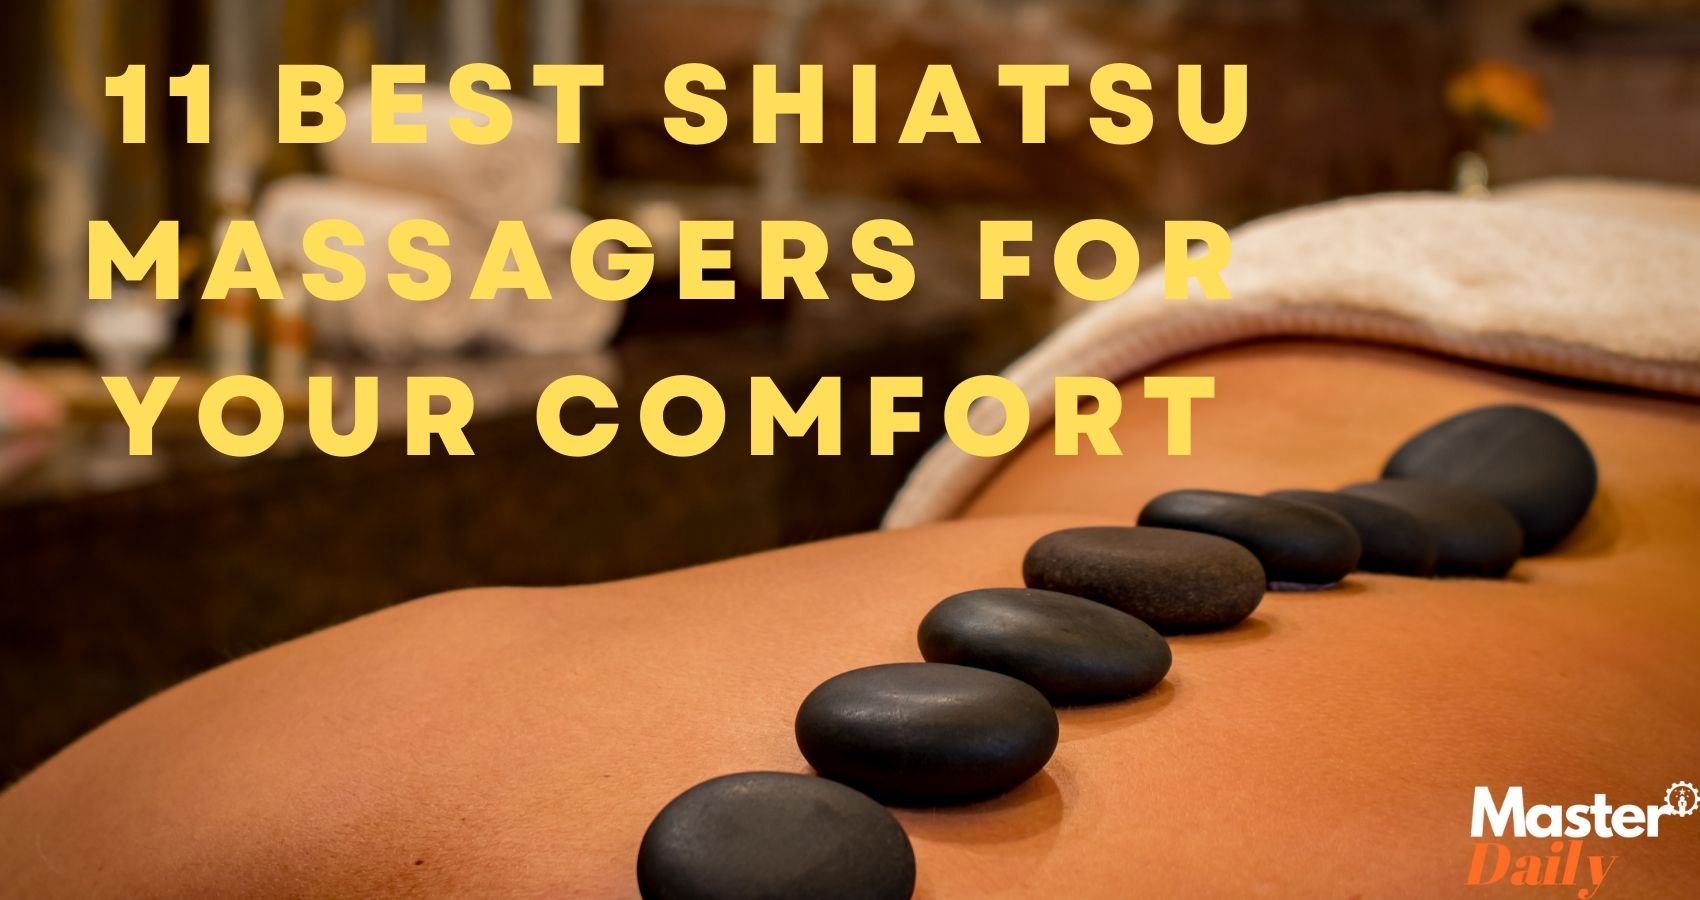 Shiatsu Massagers For Your Comfort